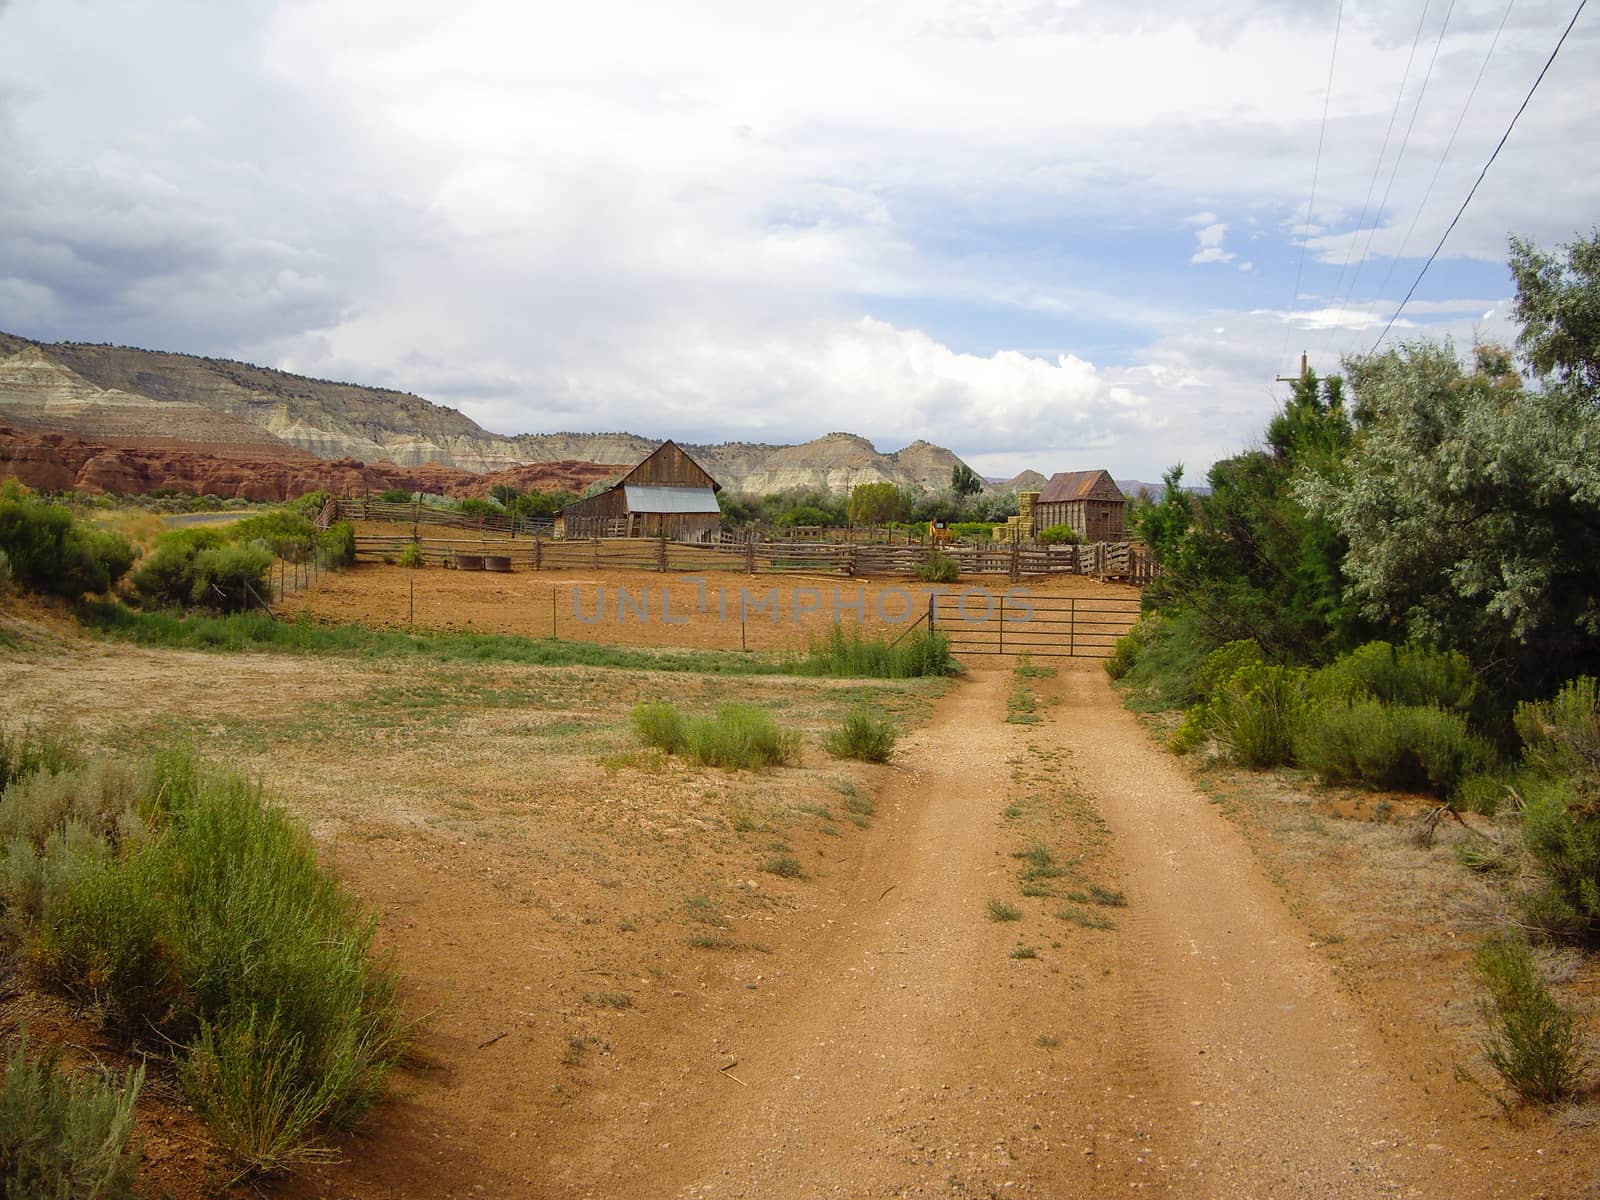 Ranch in rural Utah by emattil